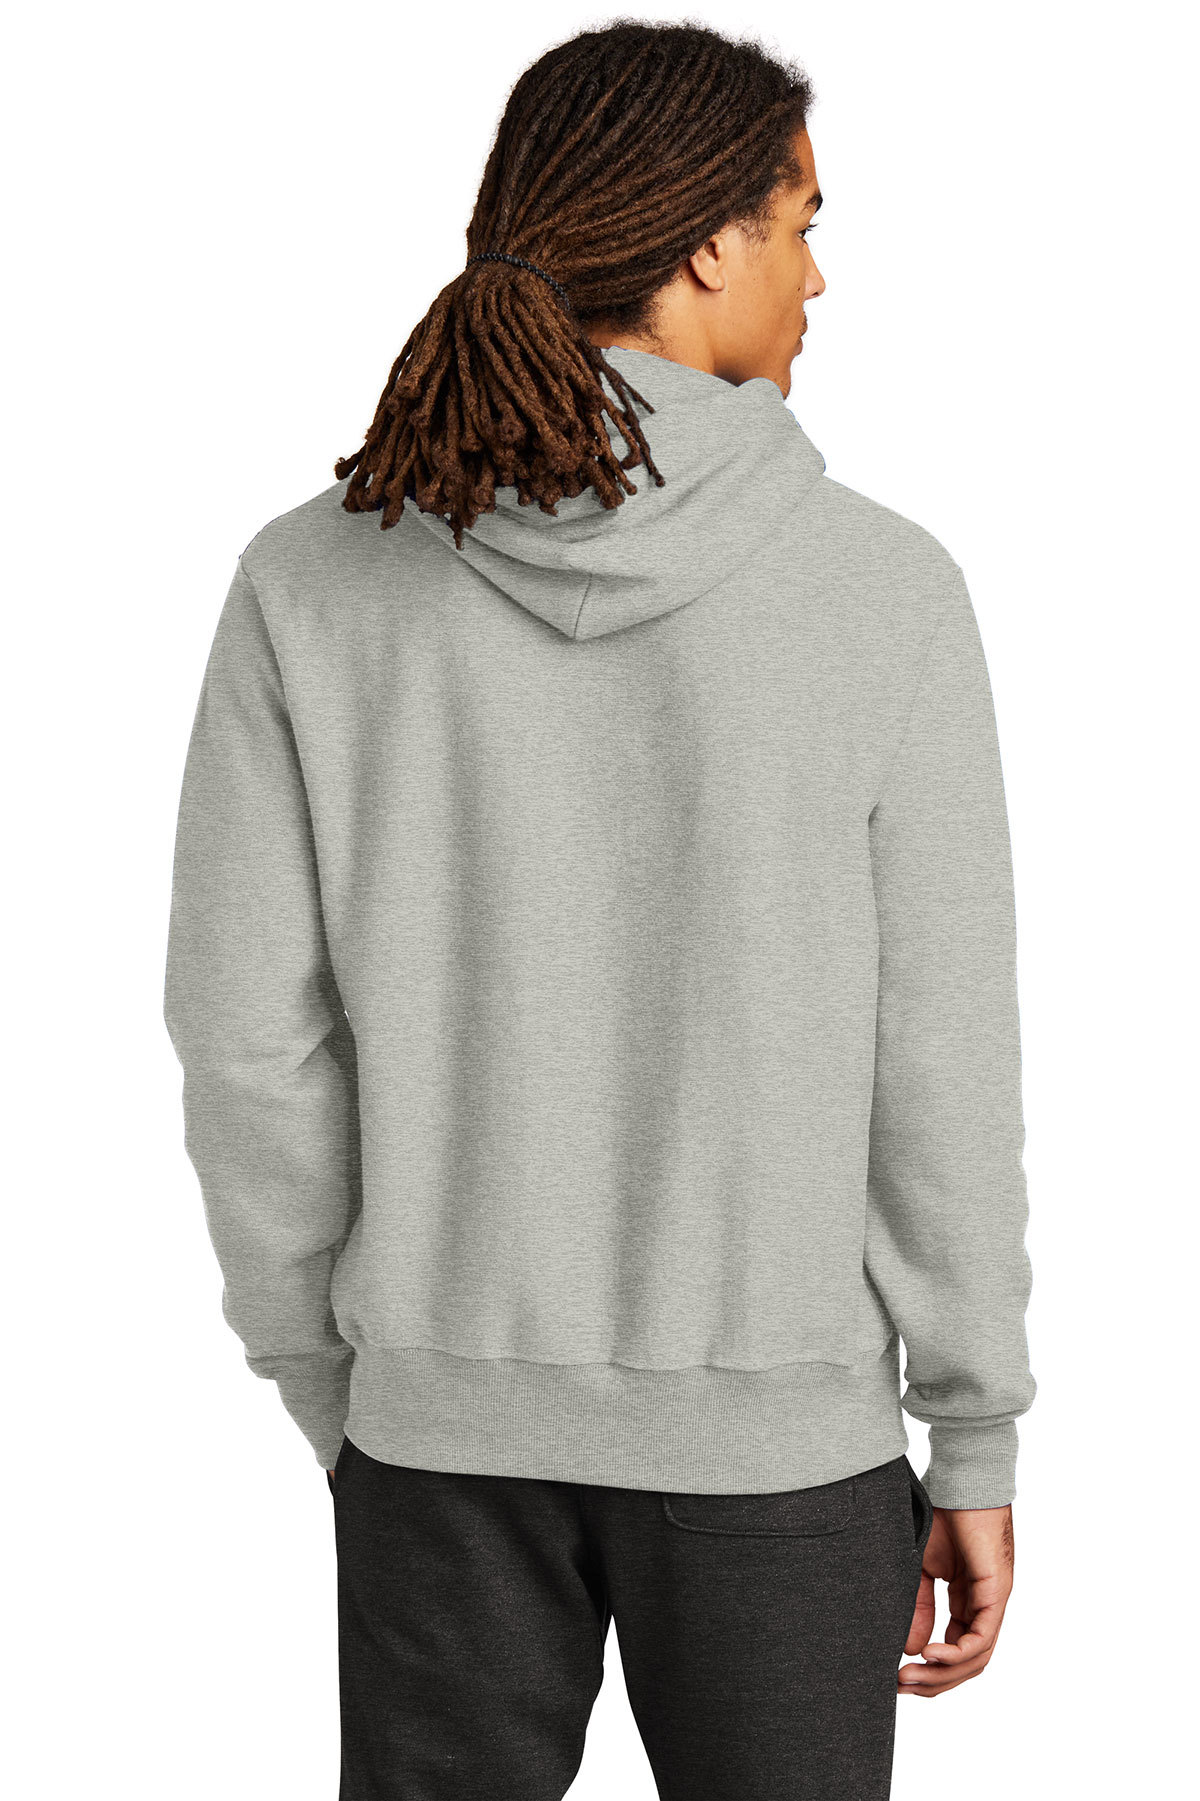 Basic Brand Hooded Sweatshirts Oxford Grey